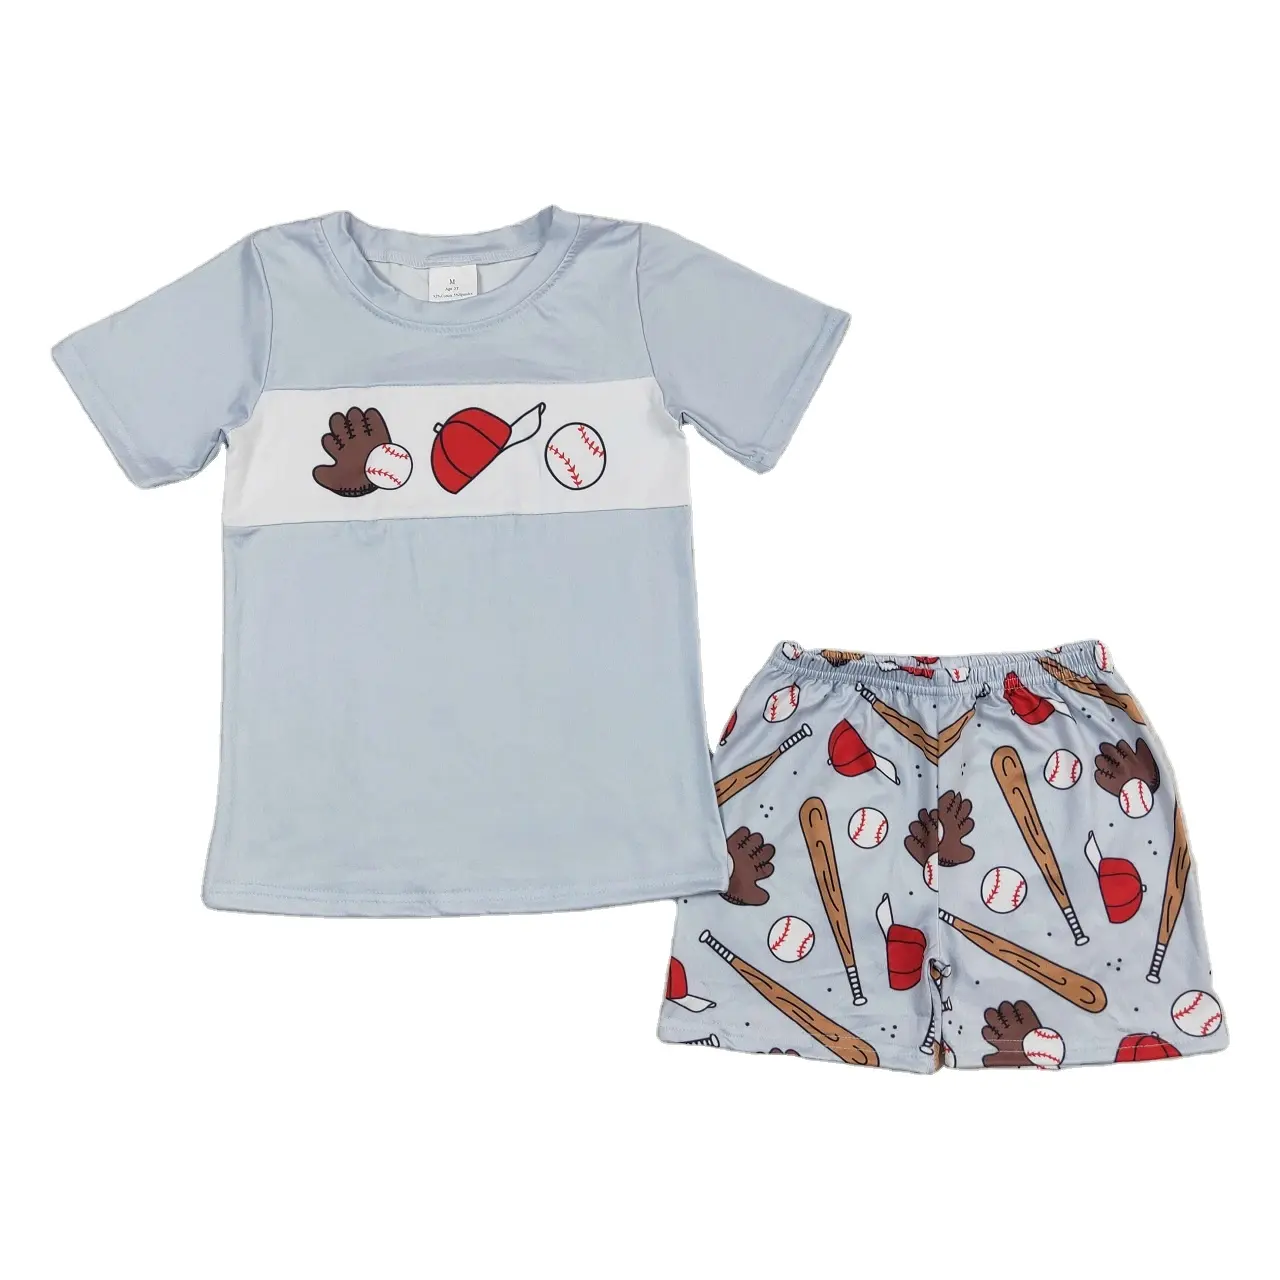 Wholesale Kids Ball Sets Toddler Blue Short Sleeves Shirt Tops Baseball Shorts Children Summer Outfit Baby Boy Clothes